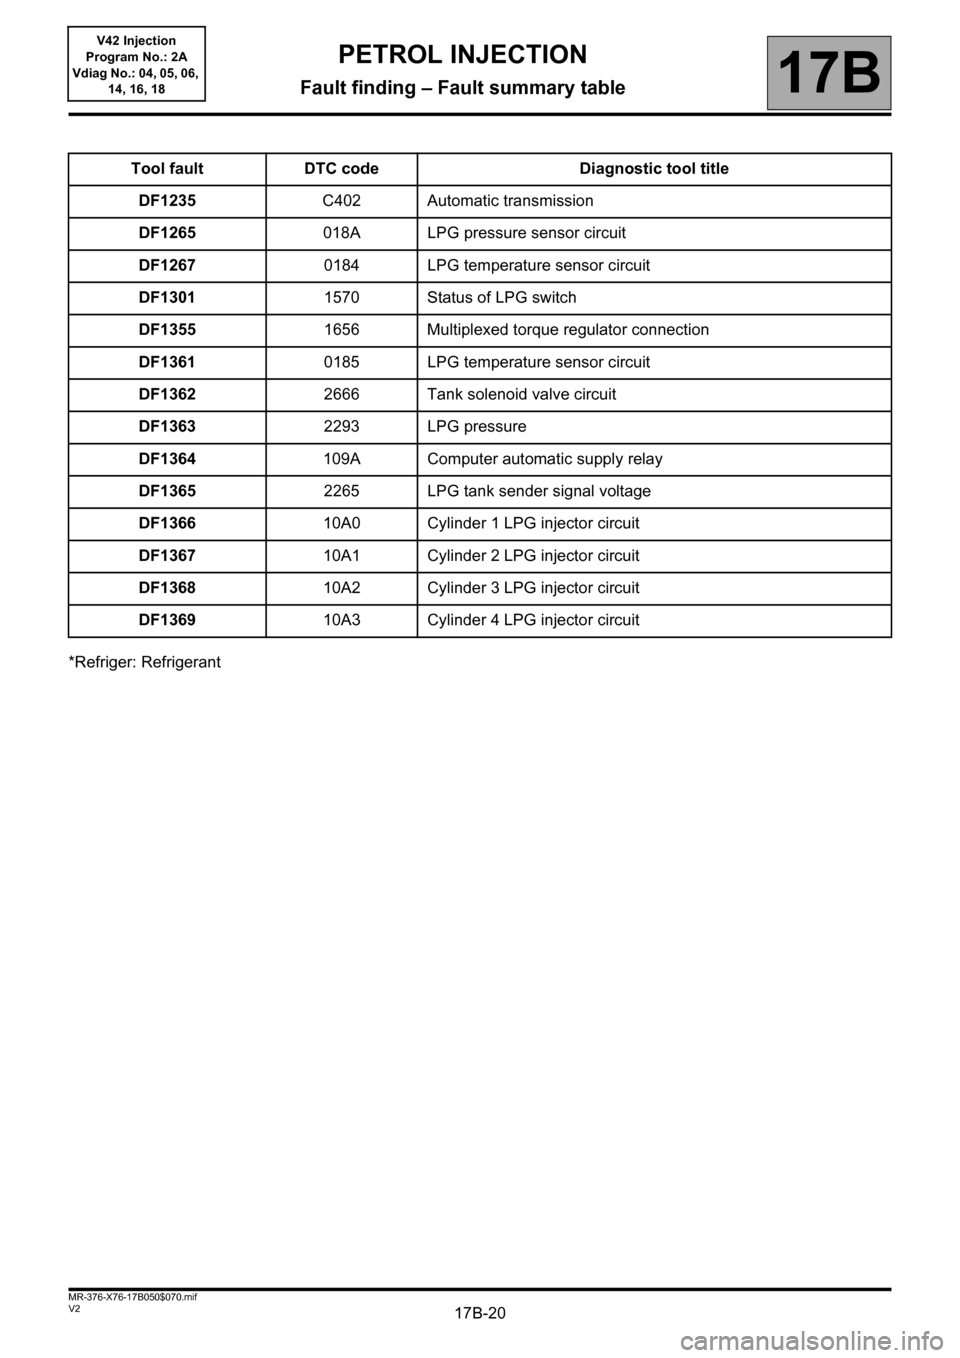 RENAULT KANGOO 2013 X61 / 2.G Petrol V42 Injection User Guide 17B-20V2 MR-376-X76-17B050$070.mif
PETROL INJECTION
Fault finding – Fault summary table17B
V42 Injection
Program No.: 2A
Vdiag No.: 04, 05, 06, 
14, 16, 18
*Refriger: RefrigerantTool fault DTC code 